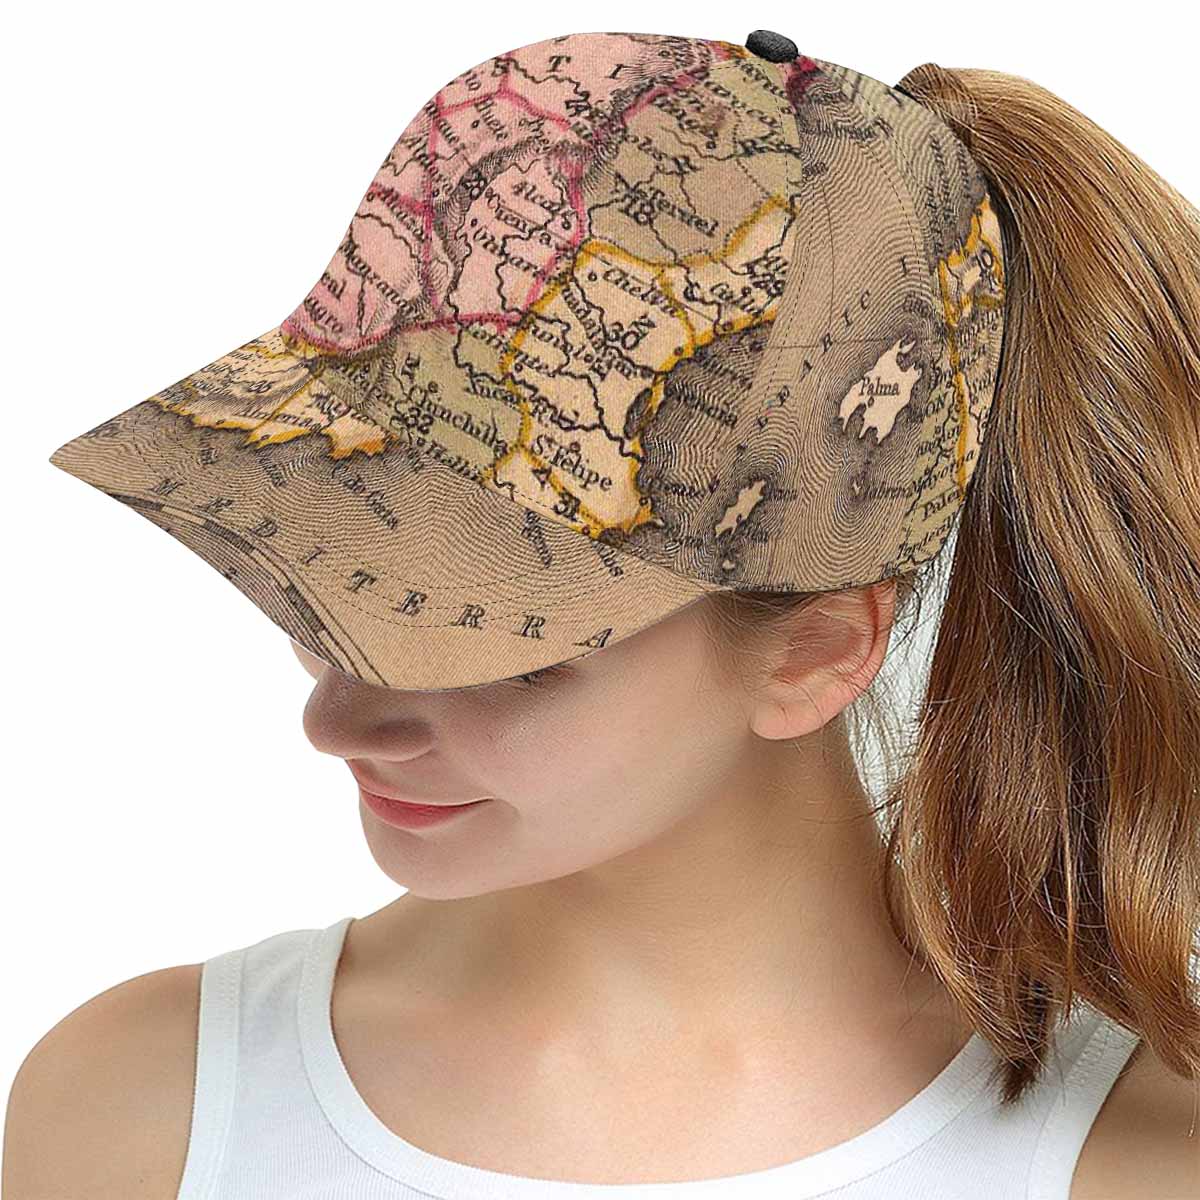 Antique Map design mens or womens deep snapback cap, trucker hat, Design 16